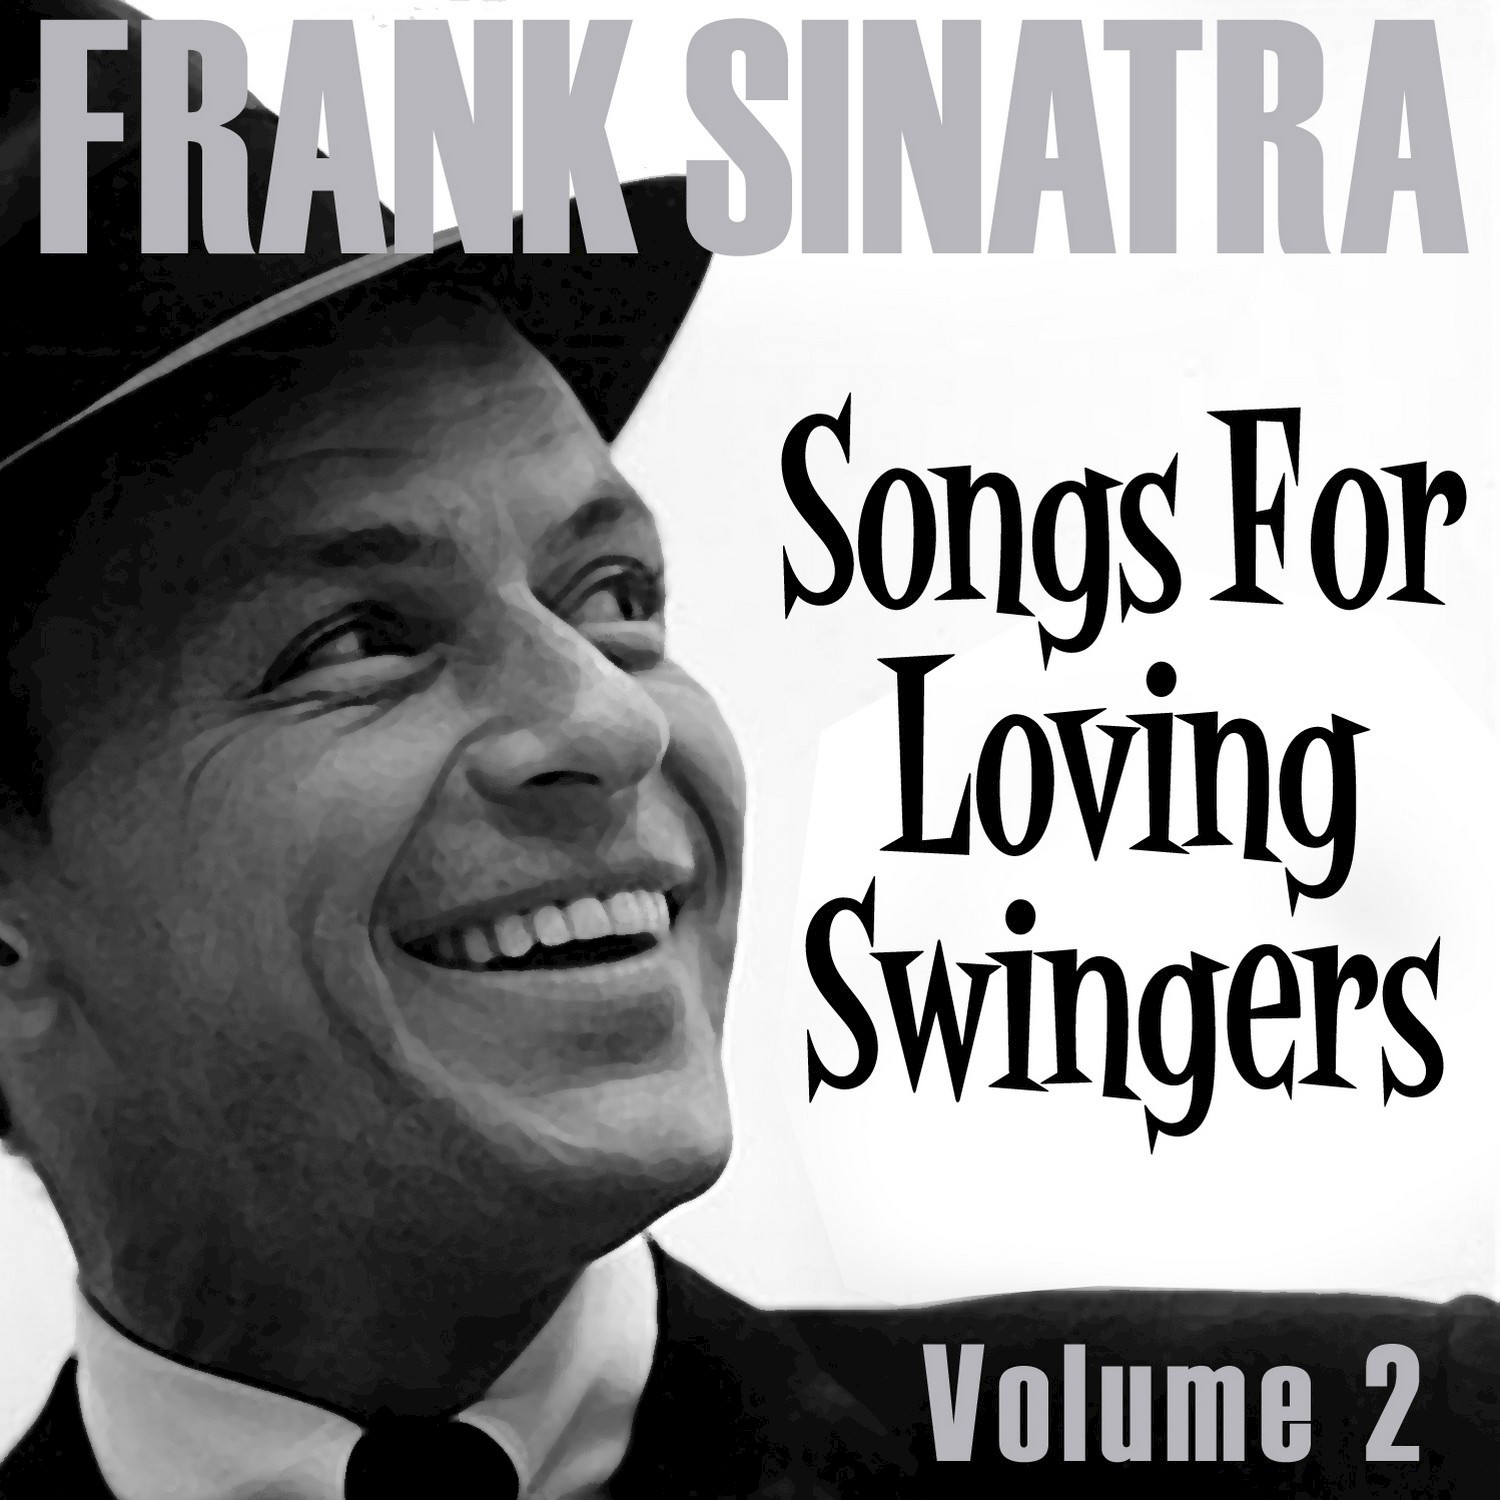 Frank Sinatra - Songs for Loving Swingers, Vol. 2